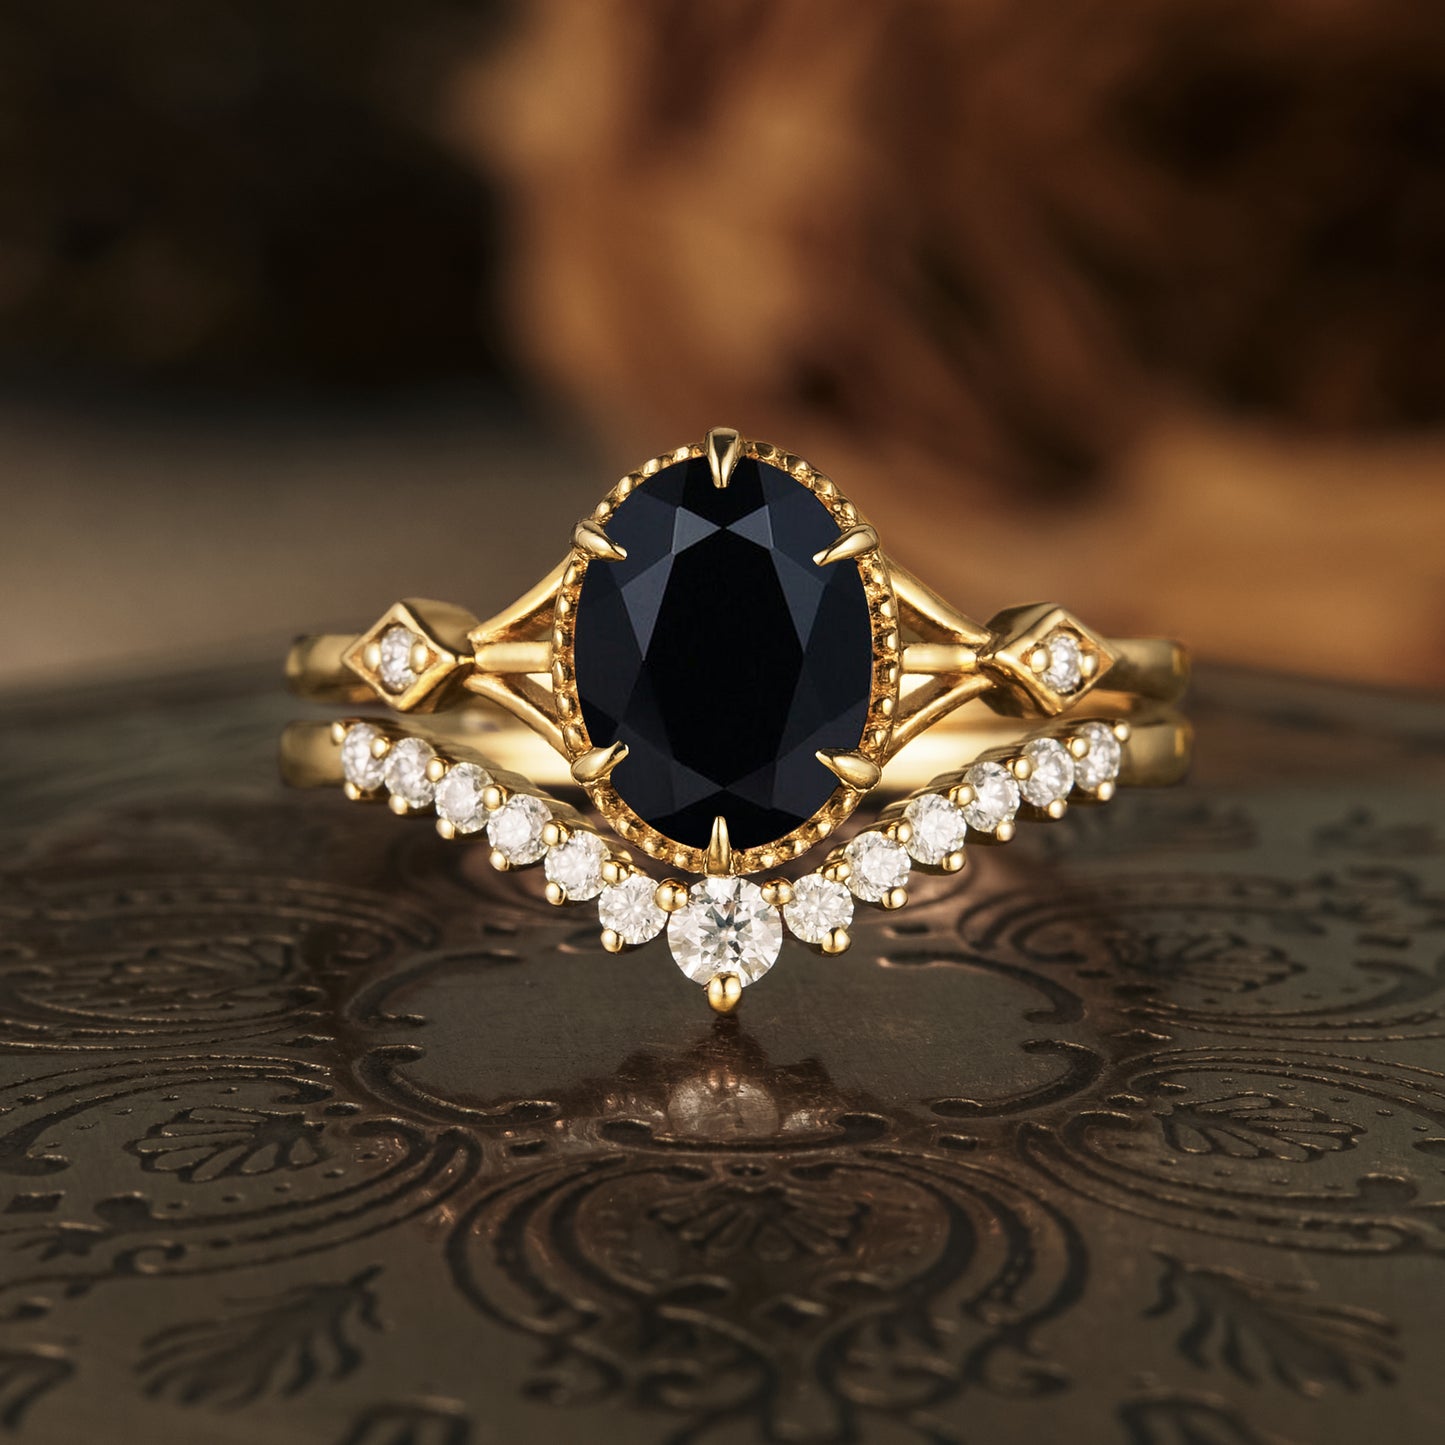 Black onyx round adjustable ring for women gold plated brass – Kiri Kiri